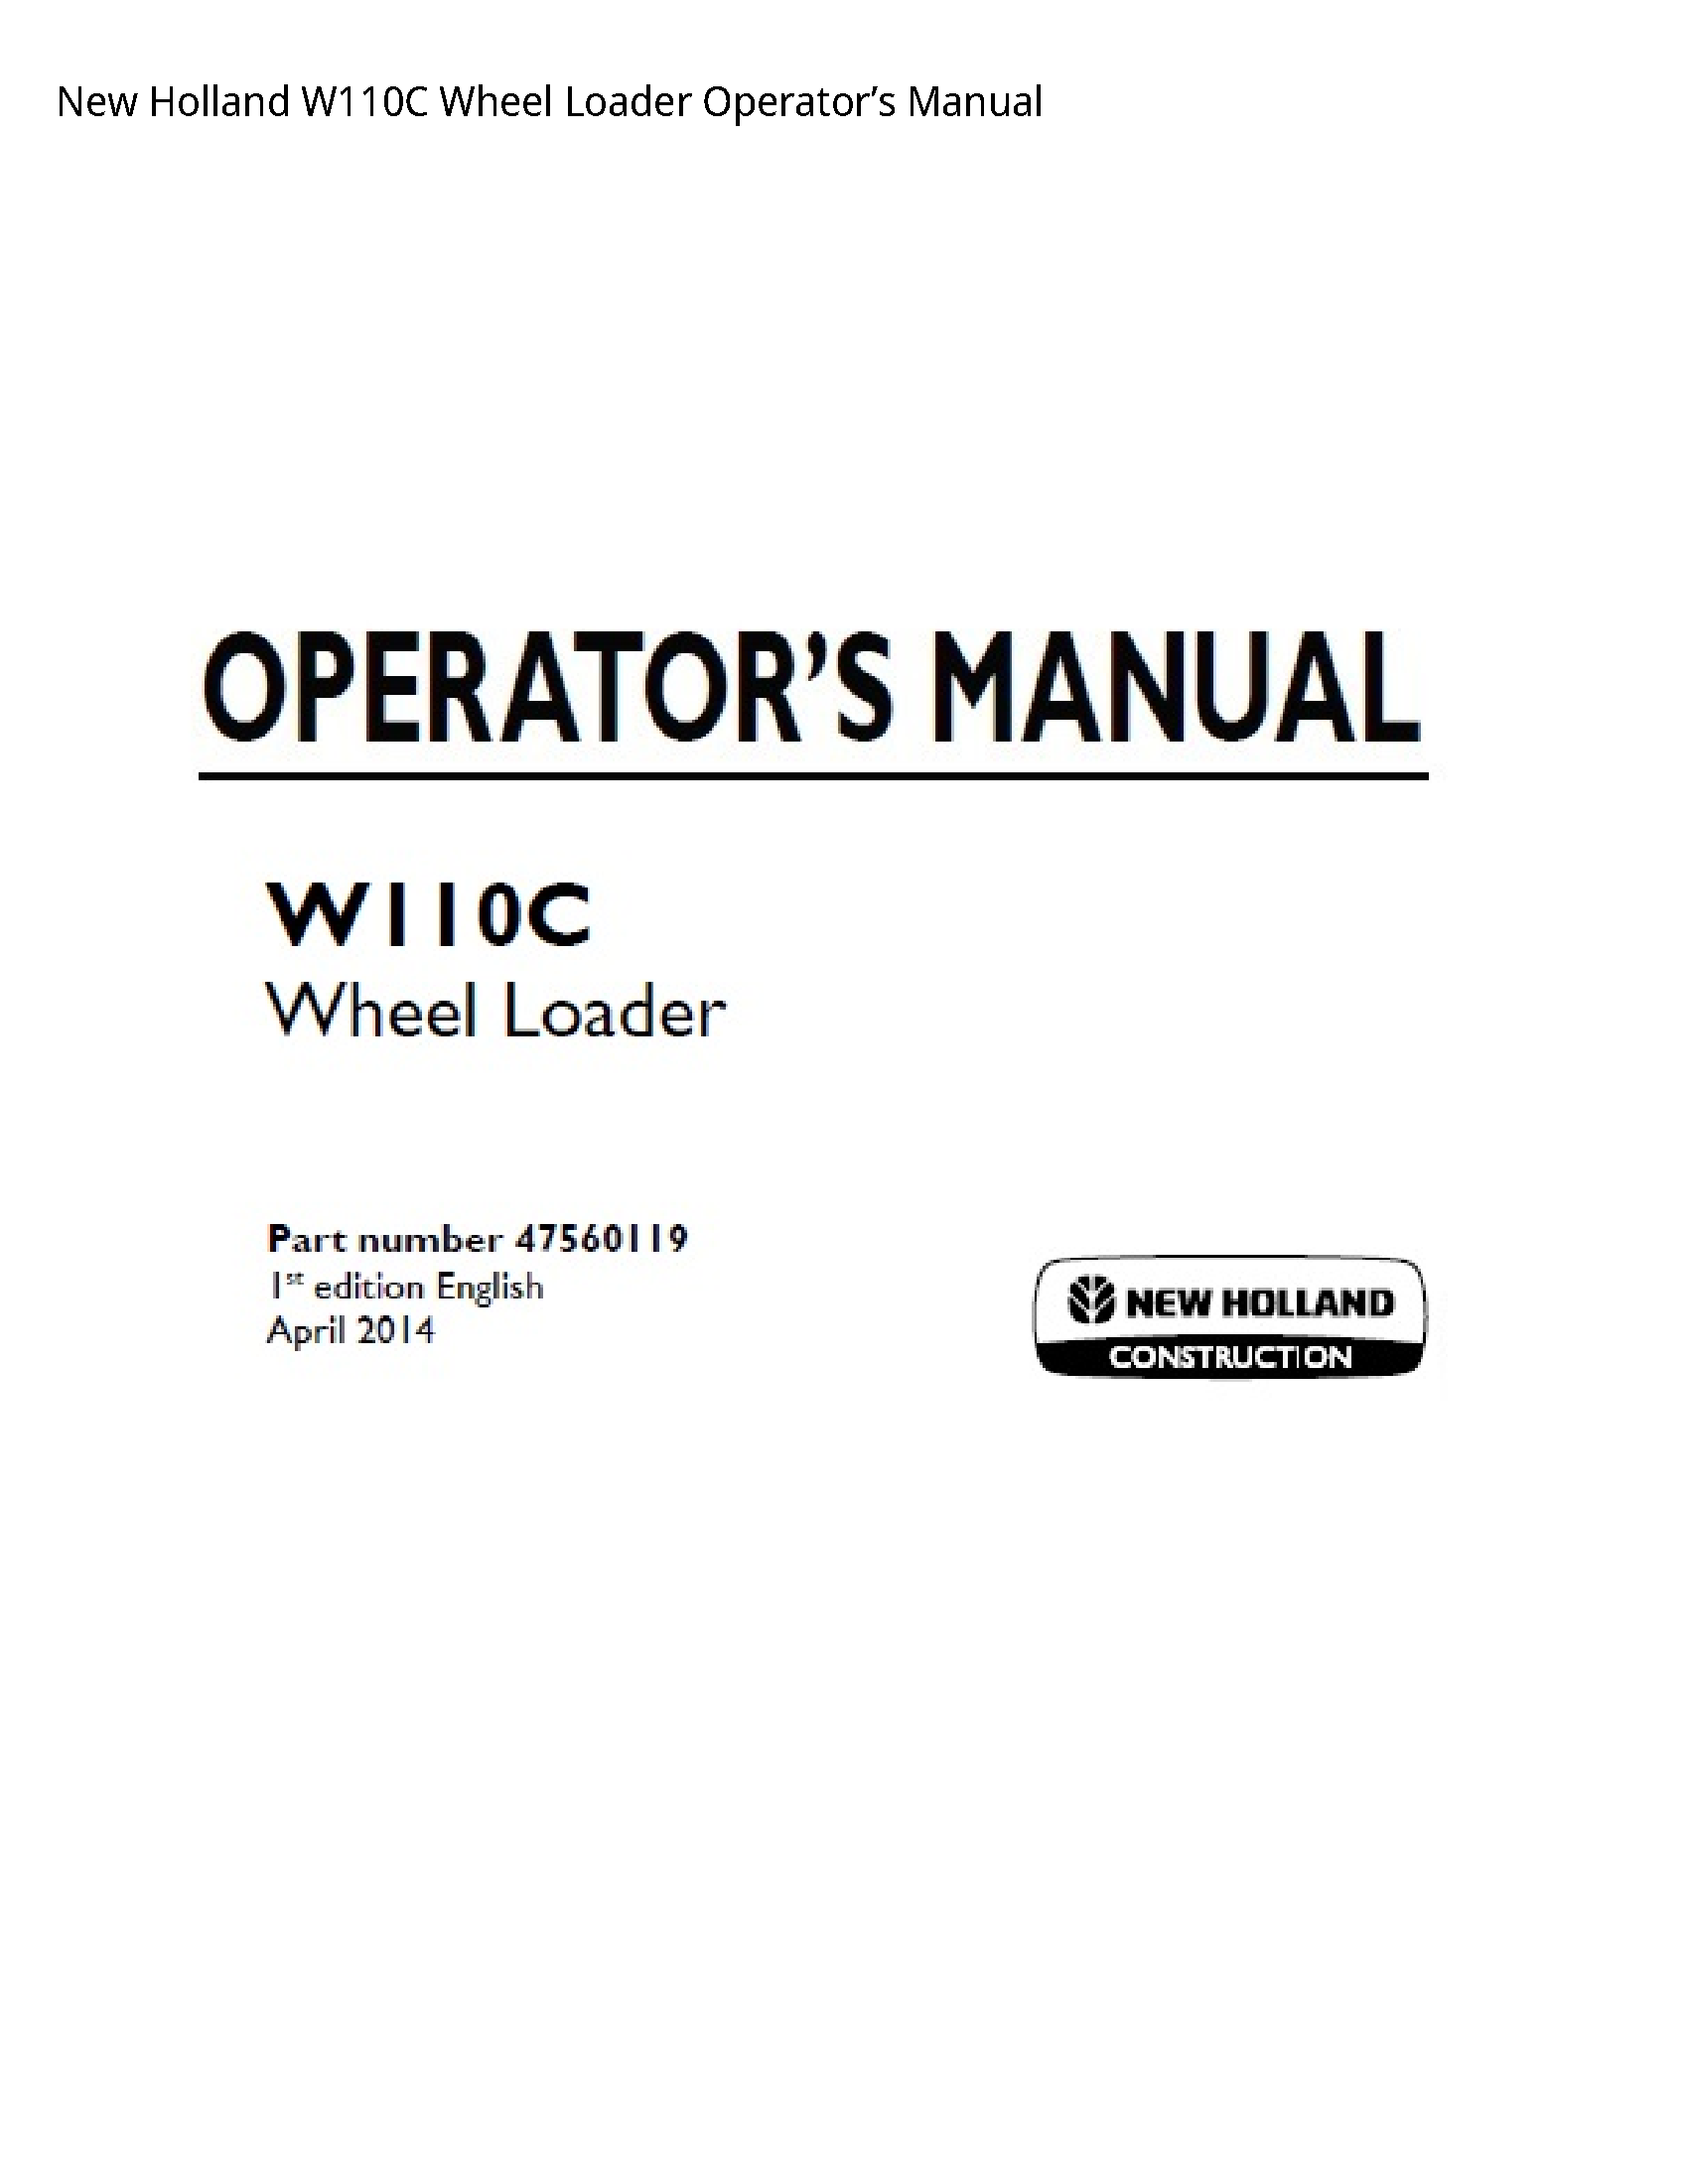 New Holland W110C Wheel Loader Operator’s manual